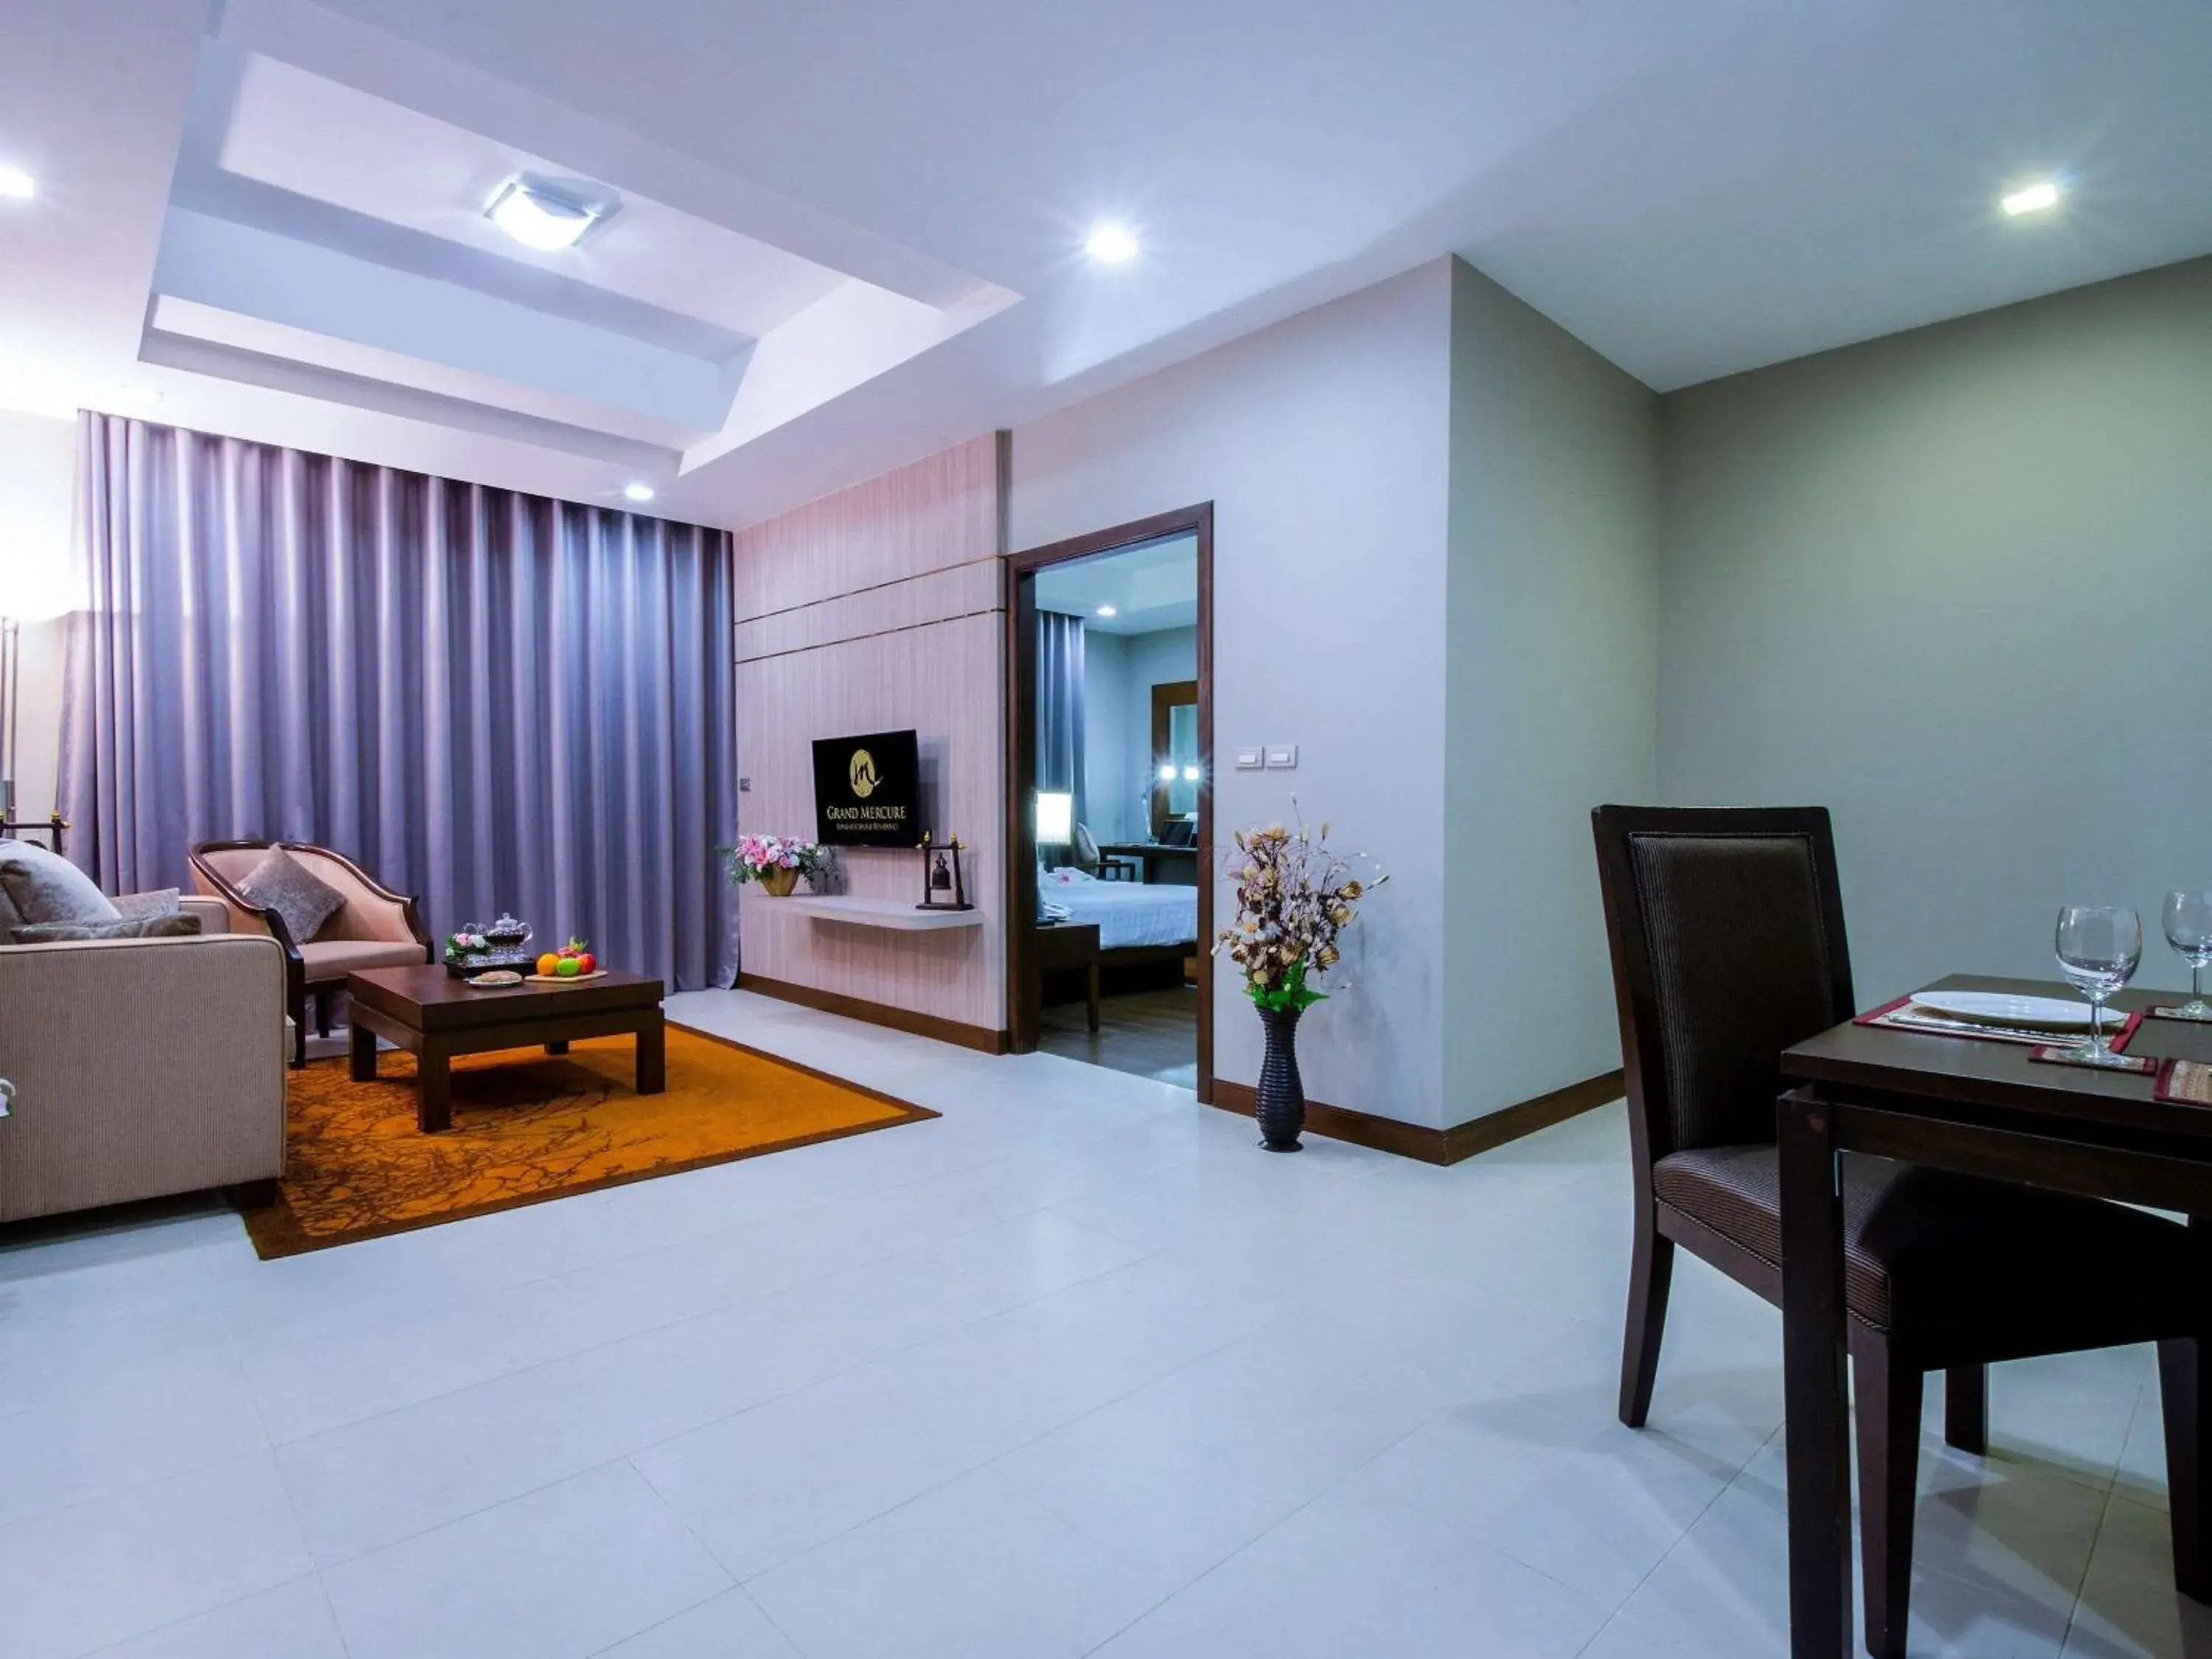 Photo of the whole room in Grand Mercure Bangkok Asoke Residence